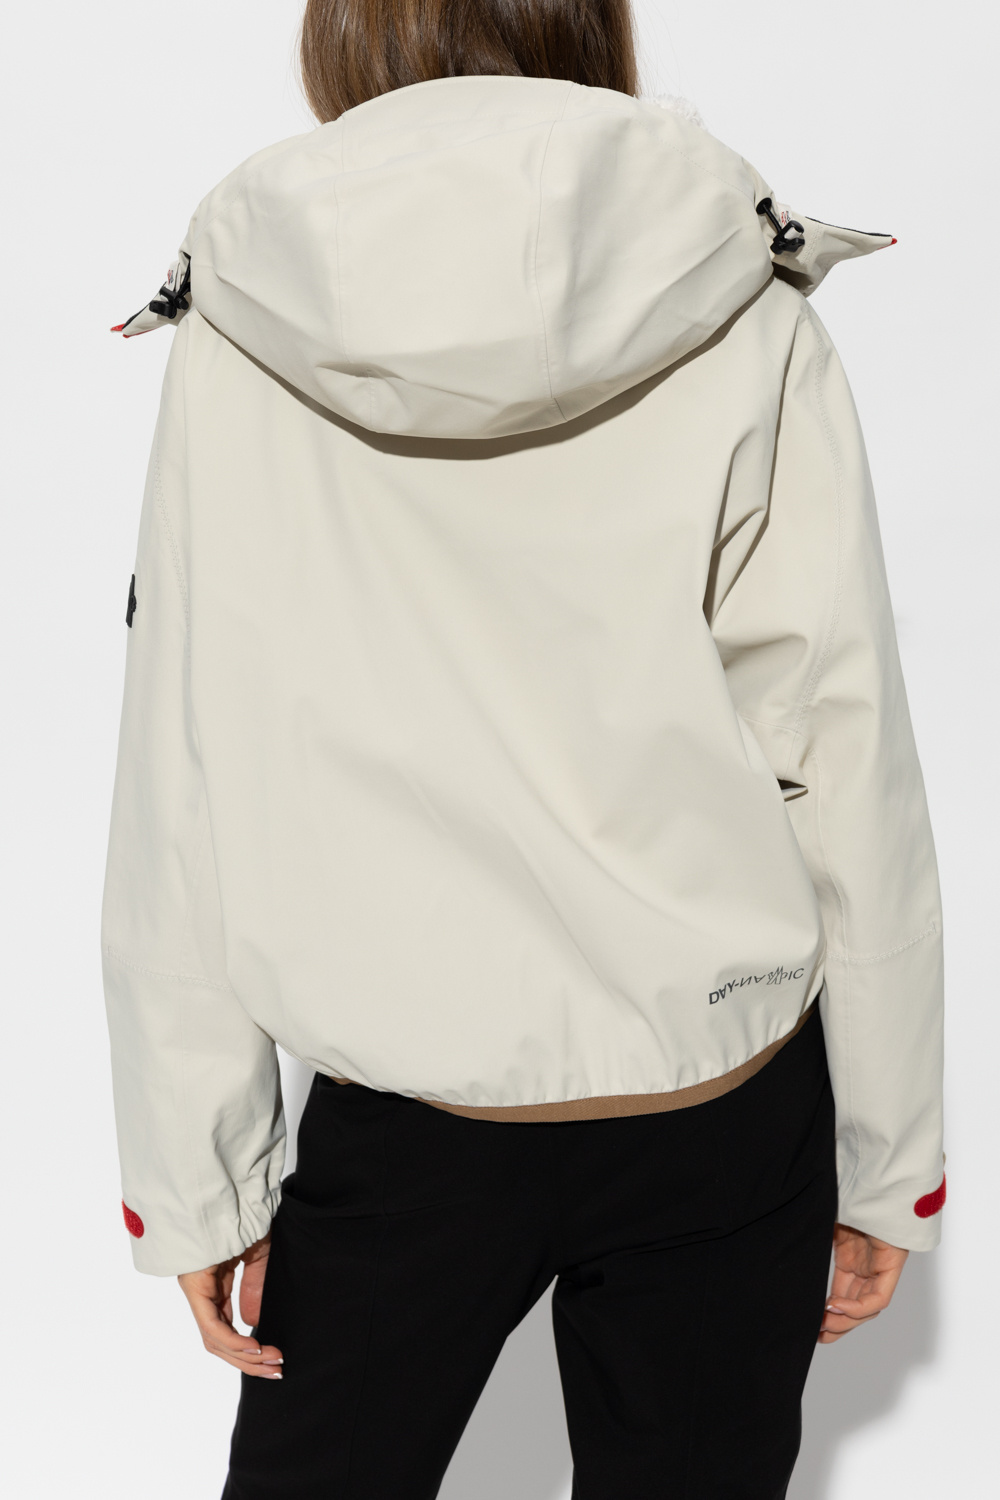 Moncler Grenoble John Elliott drop-shoulder cotton sweatshirt